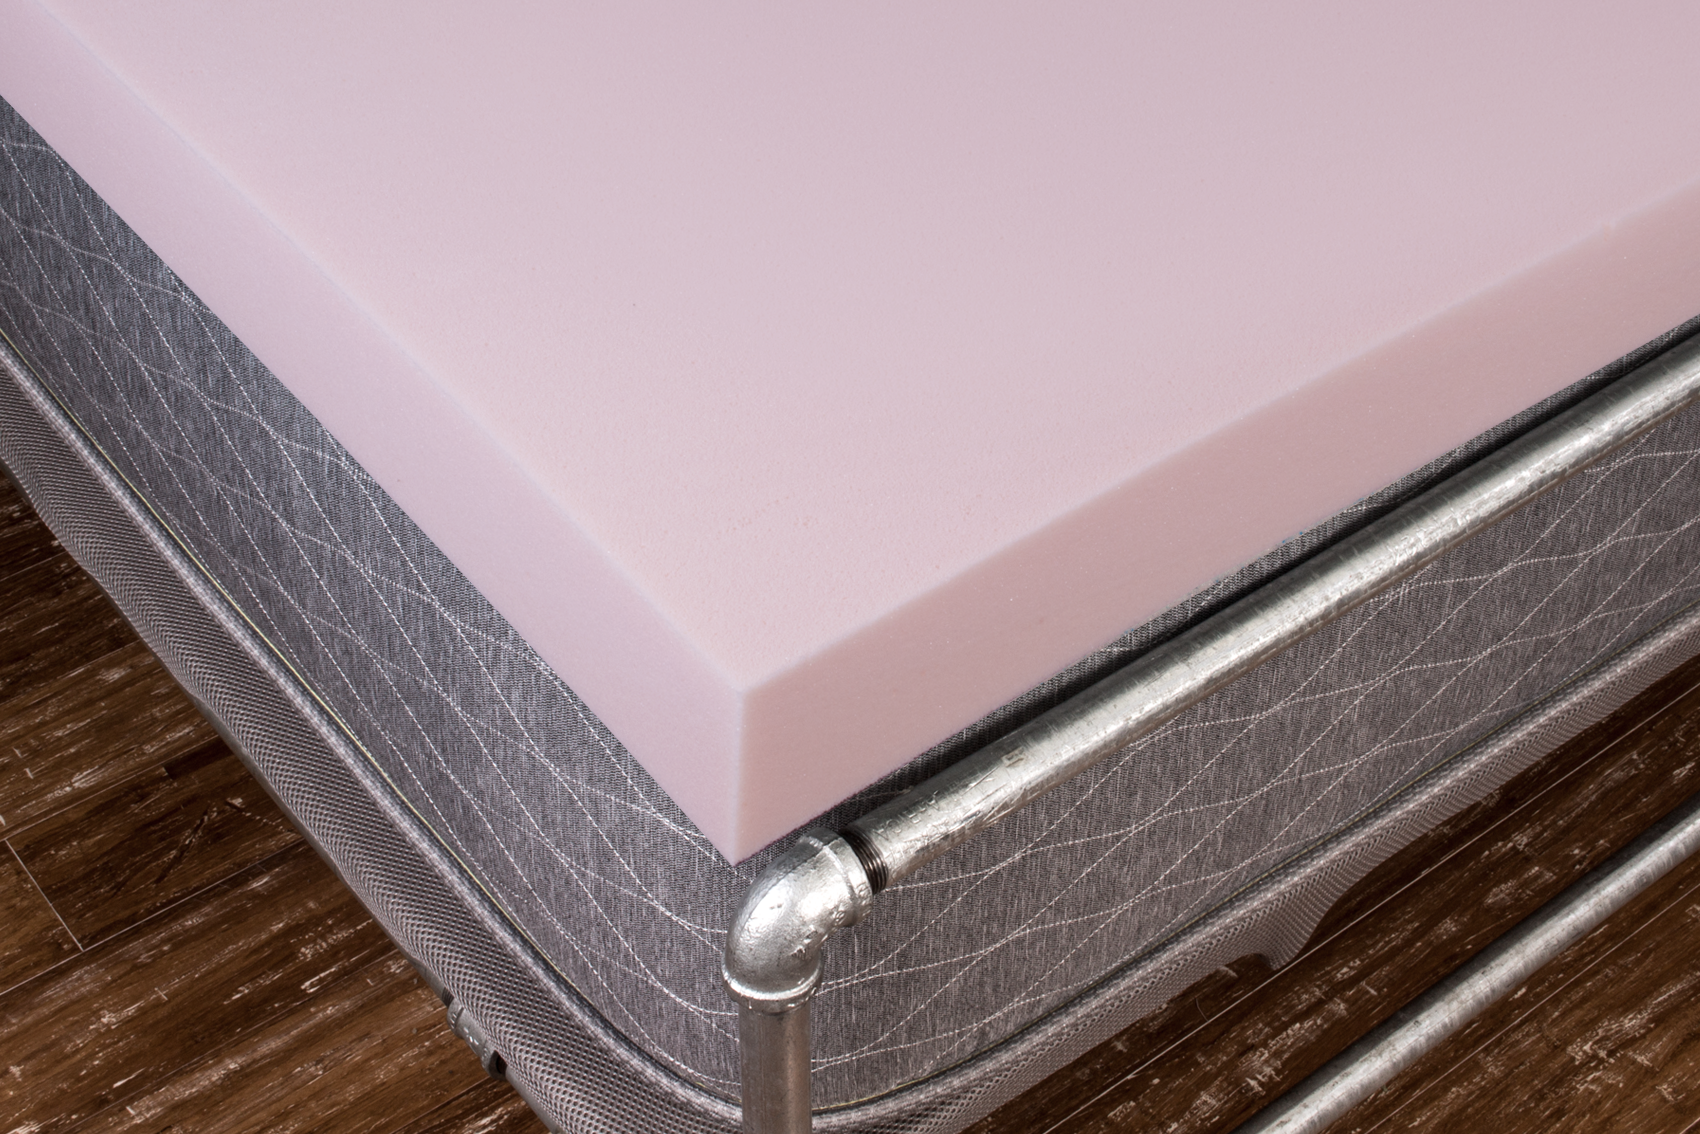 5lb density memory foam mattress topper